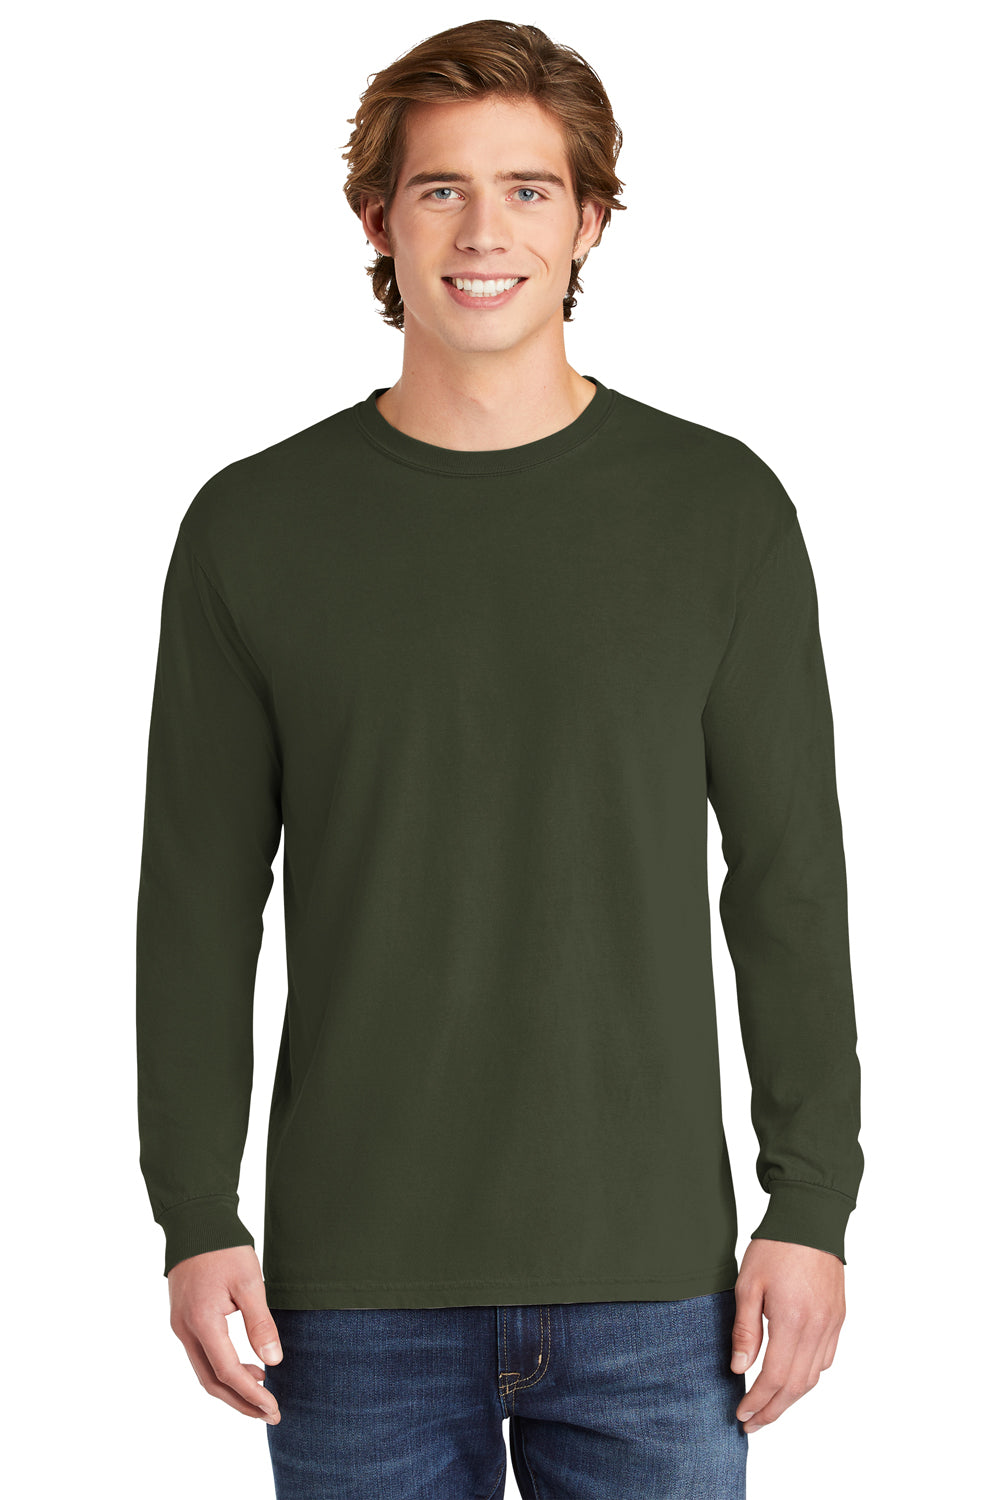 Comfort Colors 6014/C6014 Mens Long Sleeve Crewneck T-Shirt Hemp Green Front